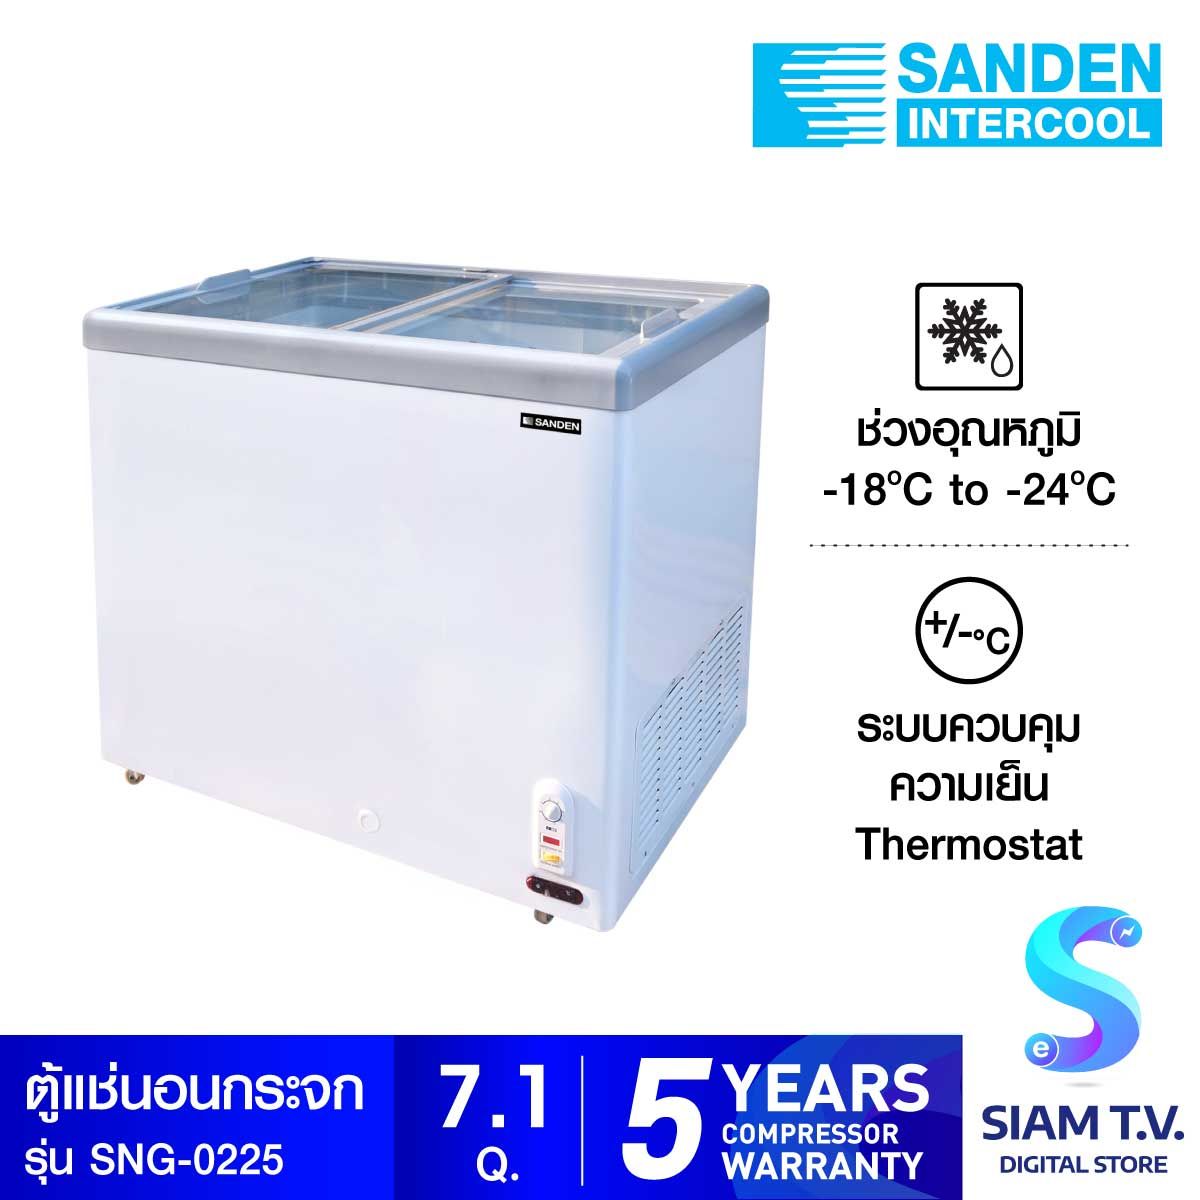 SANDEN ตู้แช่แข็งกระจกเรียบ รุ่น SNG-0225 ขนาด 7.1 Q